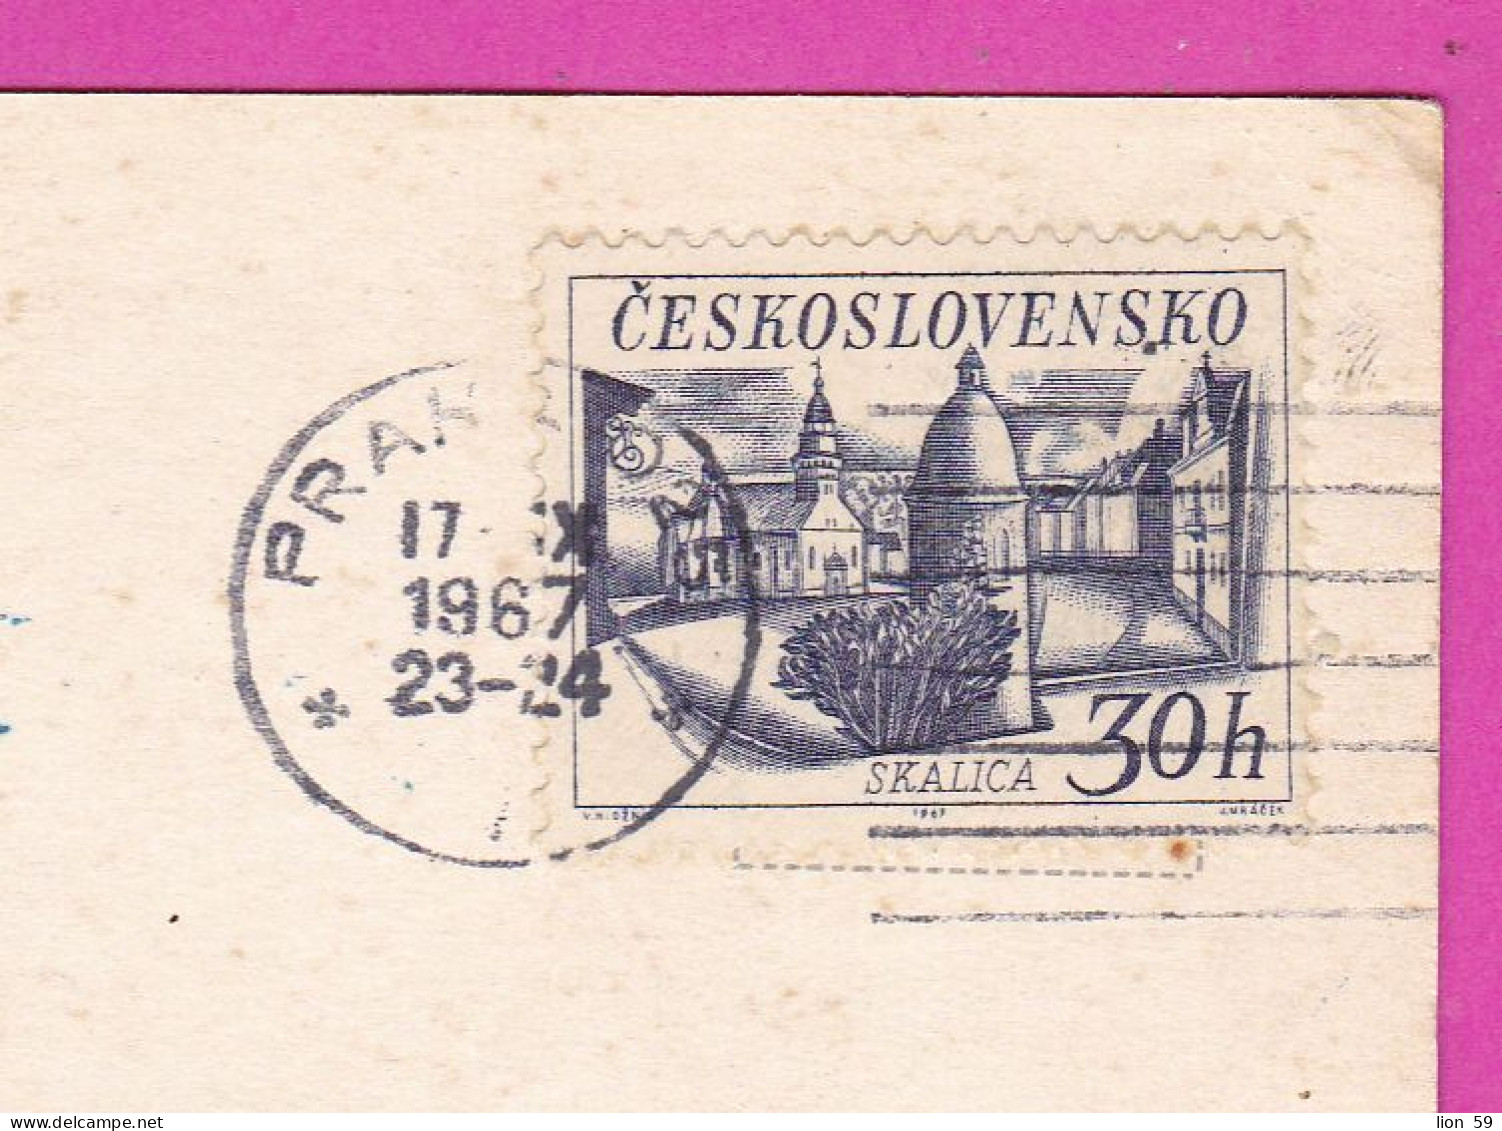 294822 / Czechoslovakia PRAHA Karluv Most Hradcany Prazske Mosty PC 1967 USED 30h Czech Towns - Skalica - Covers & Documents